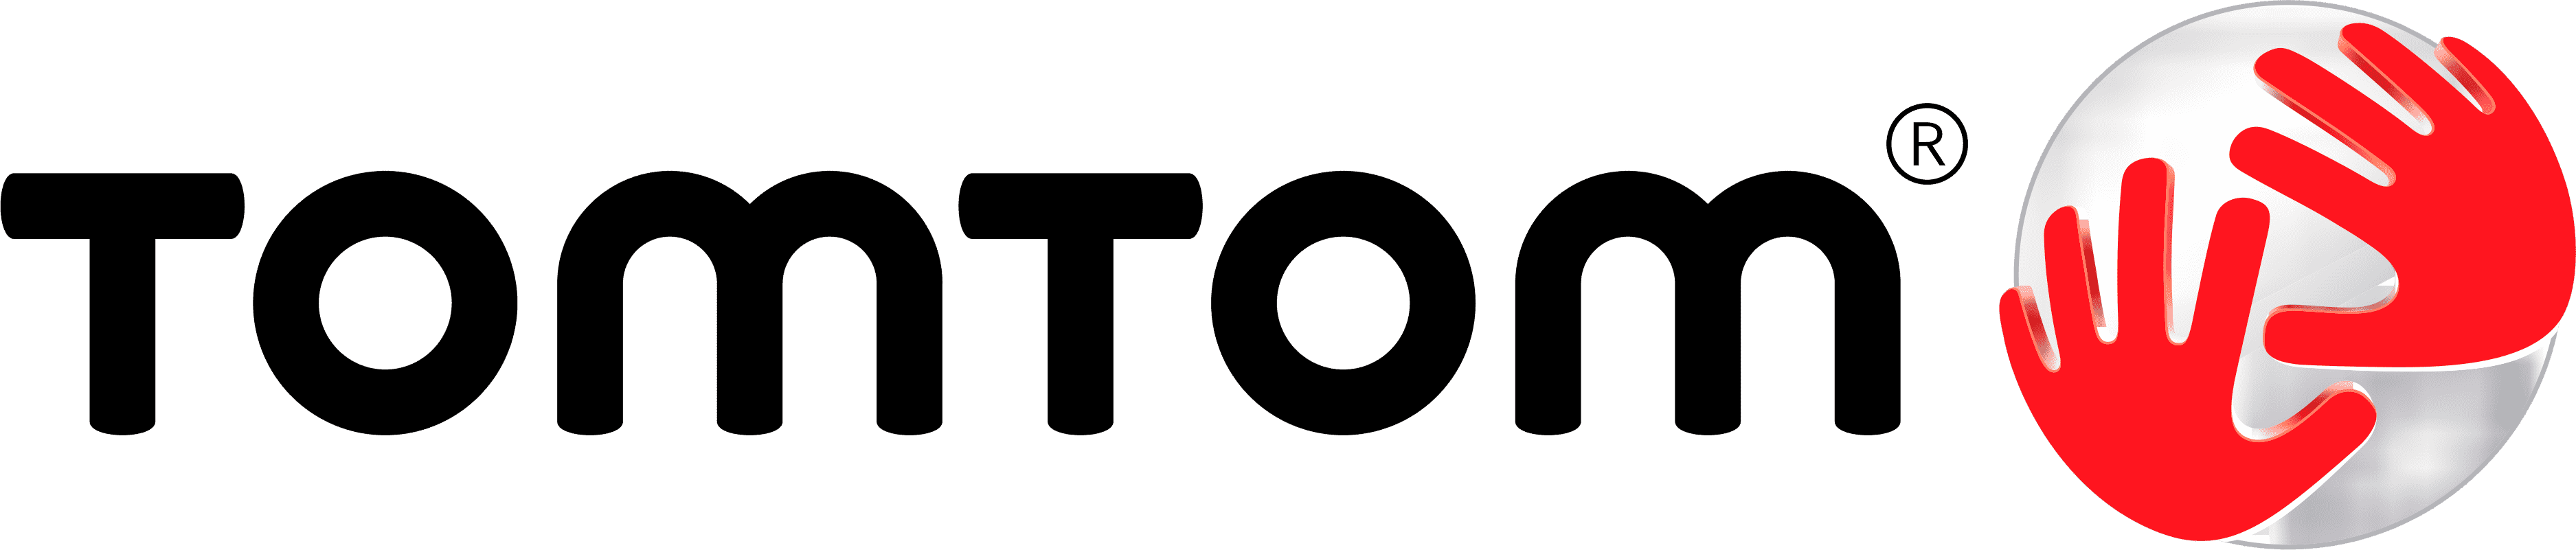 Logo TomTom | TeambuildingGuide - Original ideas for a successful team building